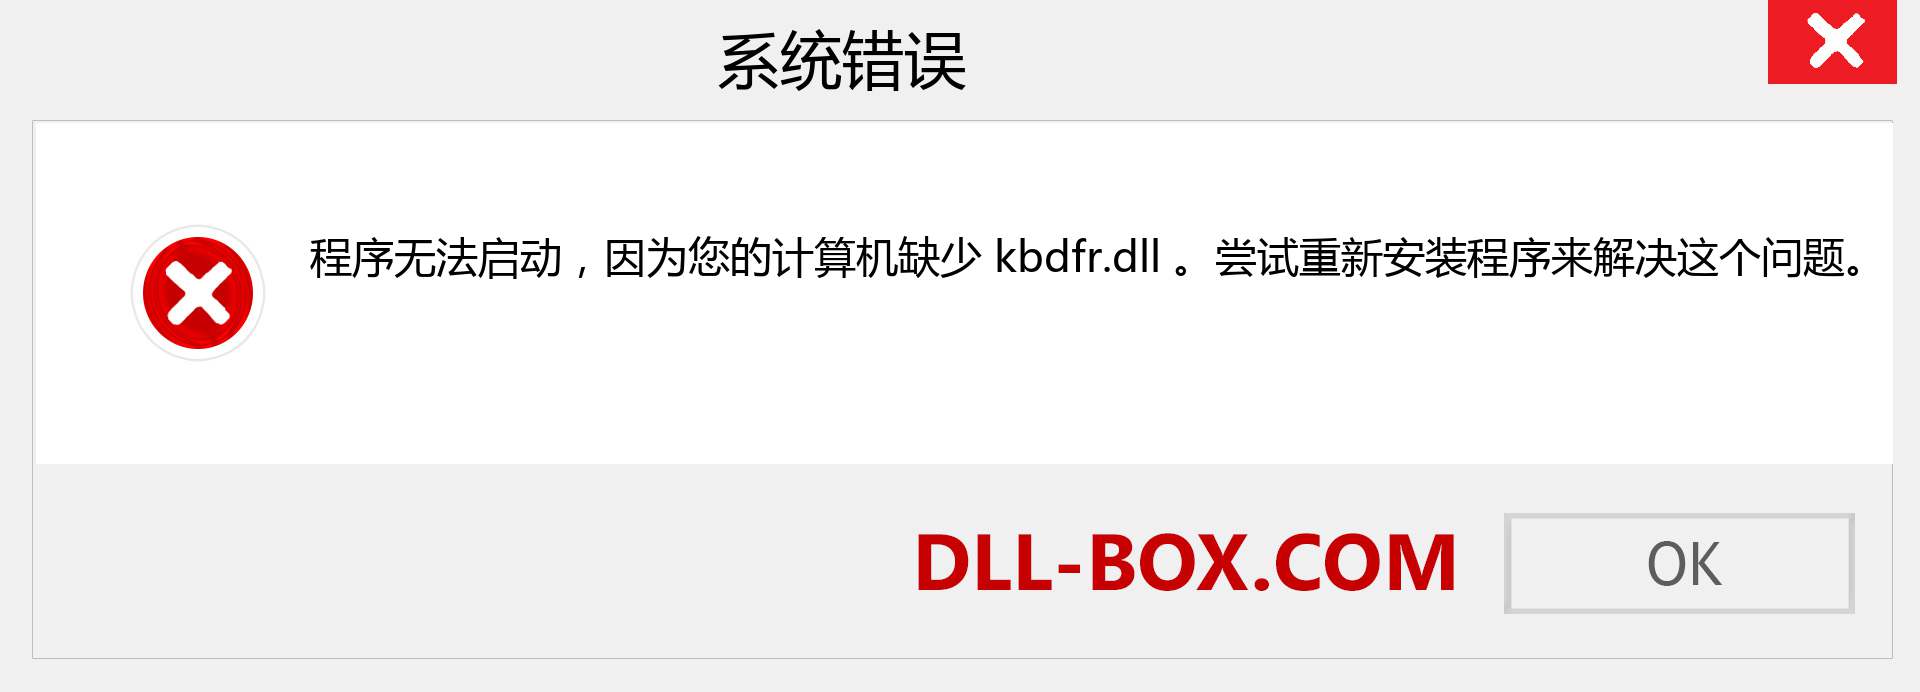 kbdfr.dll 文件丢失？。 适用于 Windows 7、8、10 的下载 - 修复 Windows、照片、图像上的 kbdfr dll 丢失错误